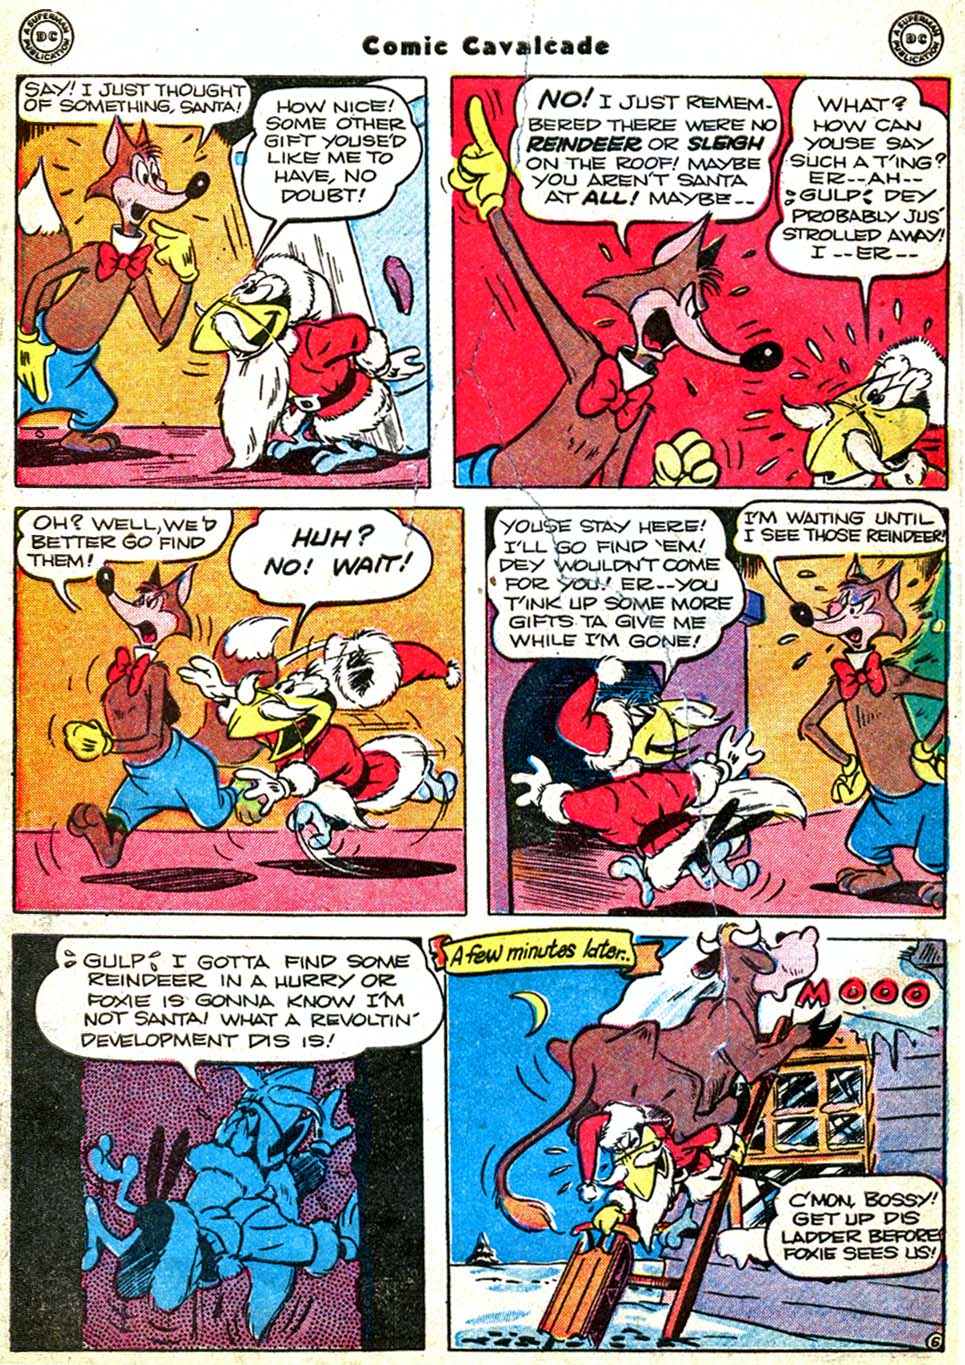 Comic Cavalcade issue 31 - Page 8